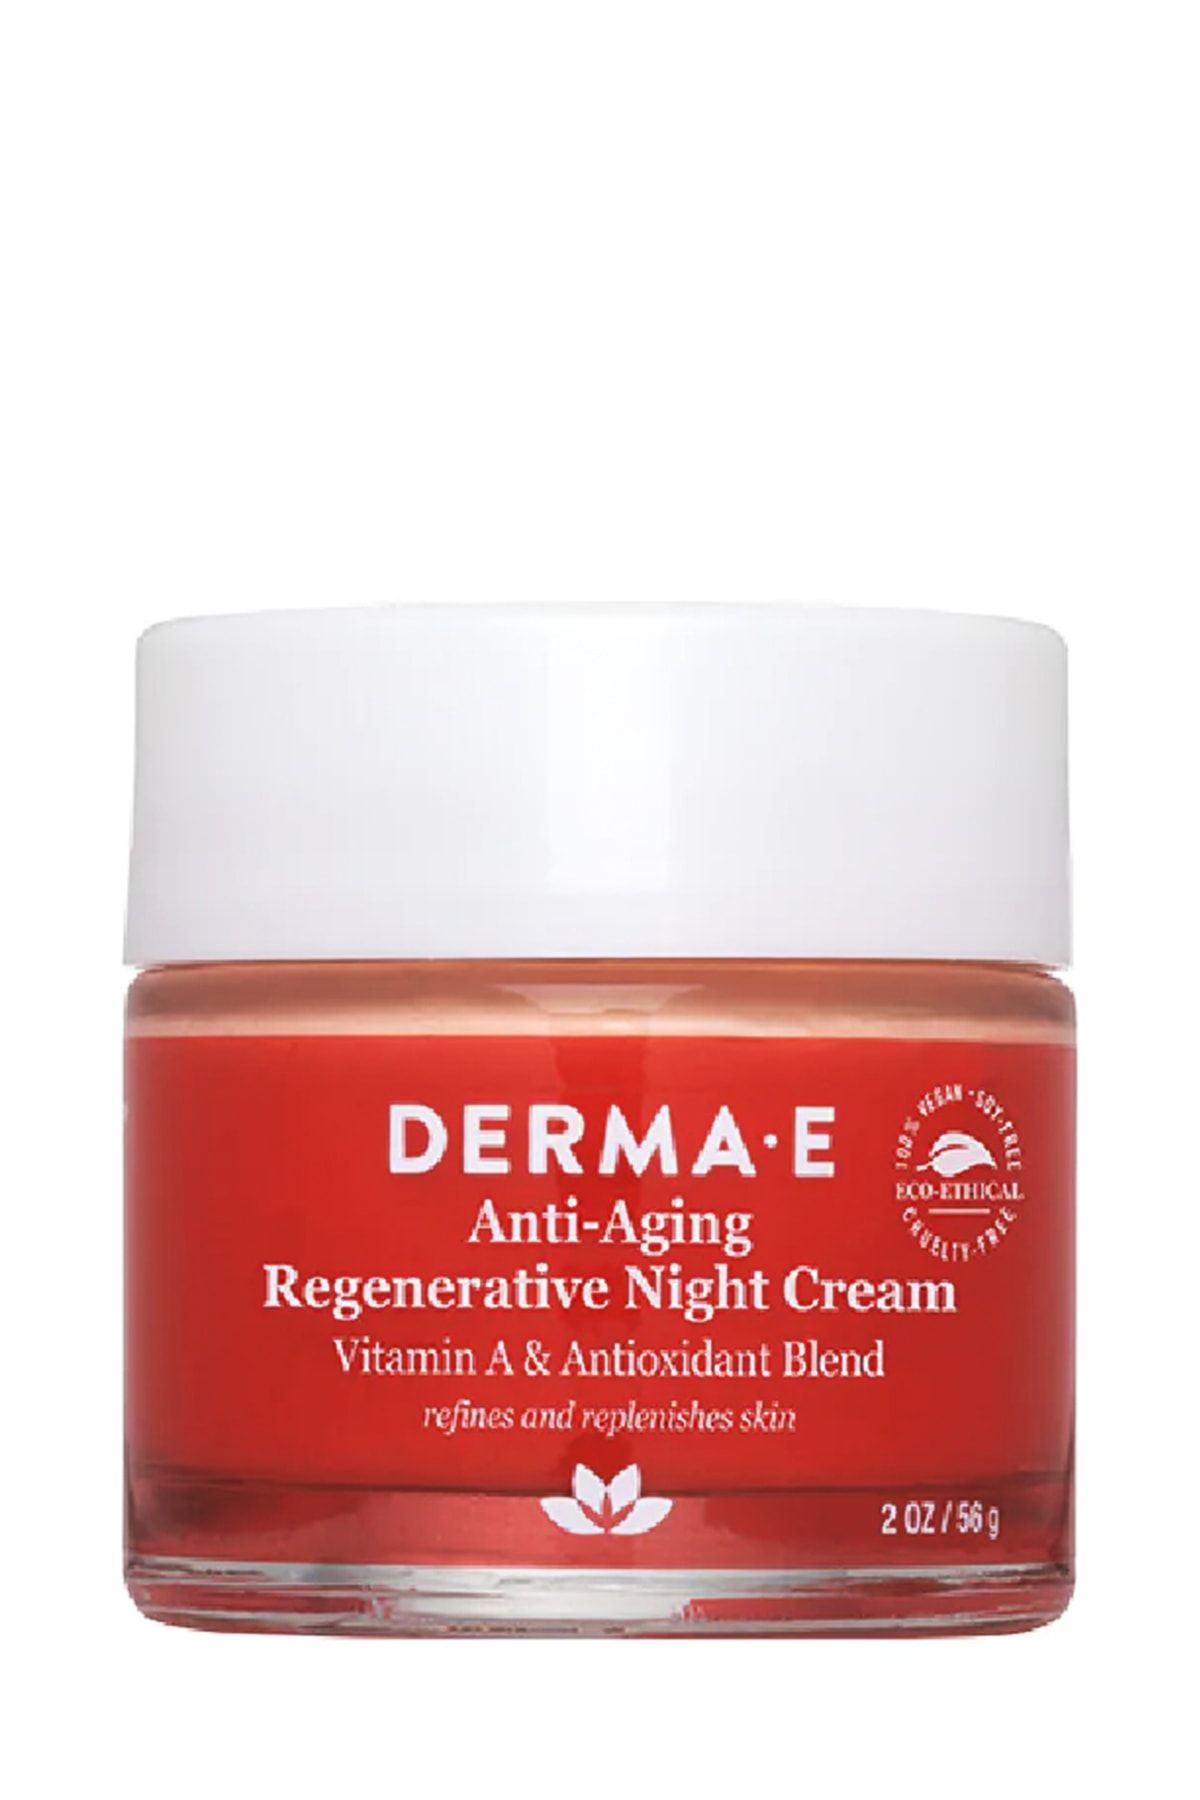 DERMA E Anti-aging Regenerative Night Cream - 56 G